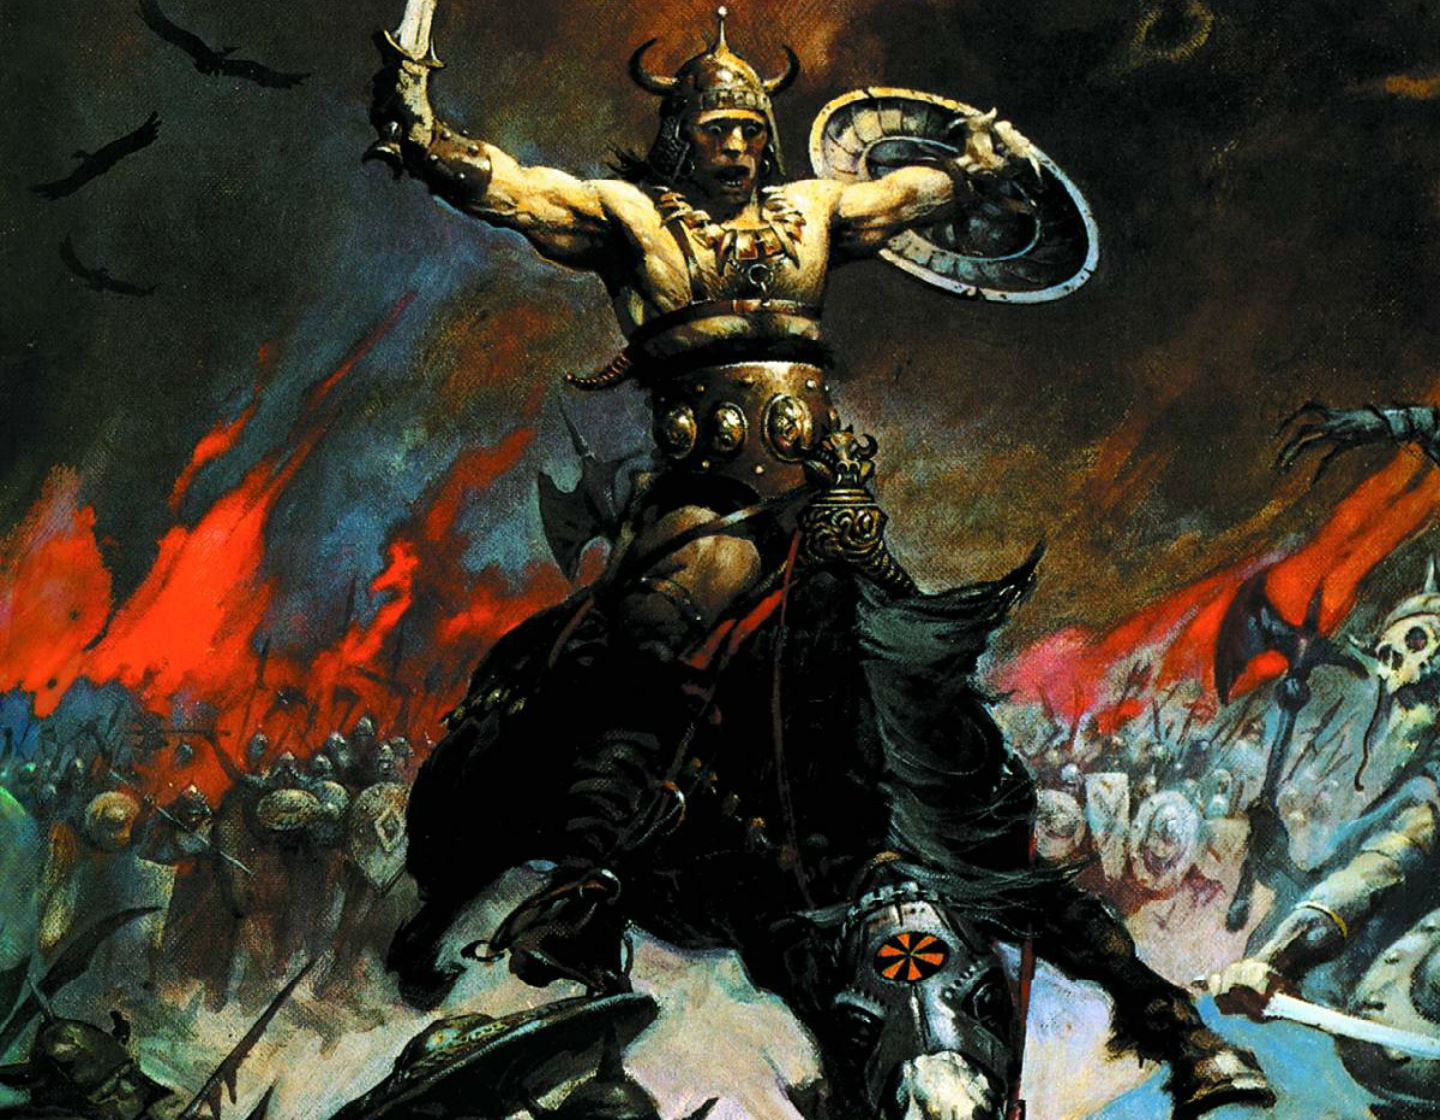 Conan the barbarian wallpaper 1920x1080 269230 WallpaperUP